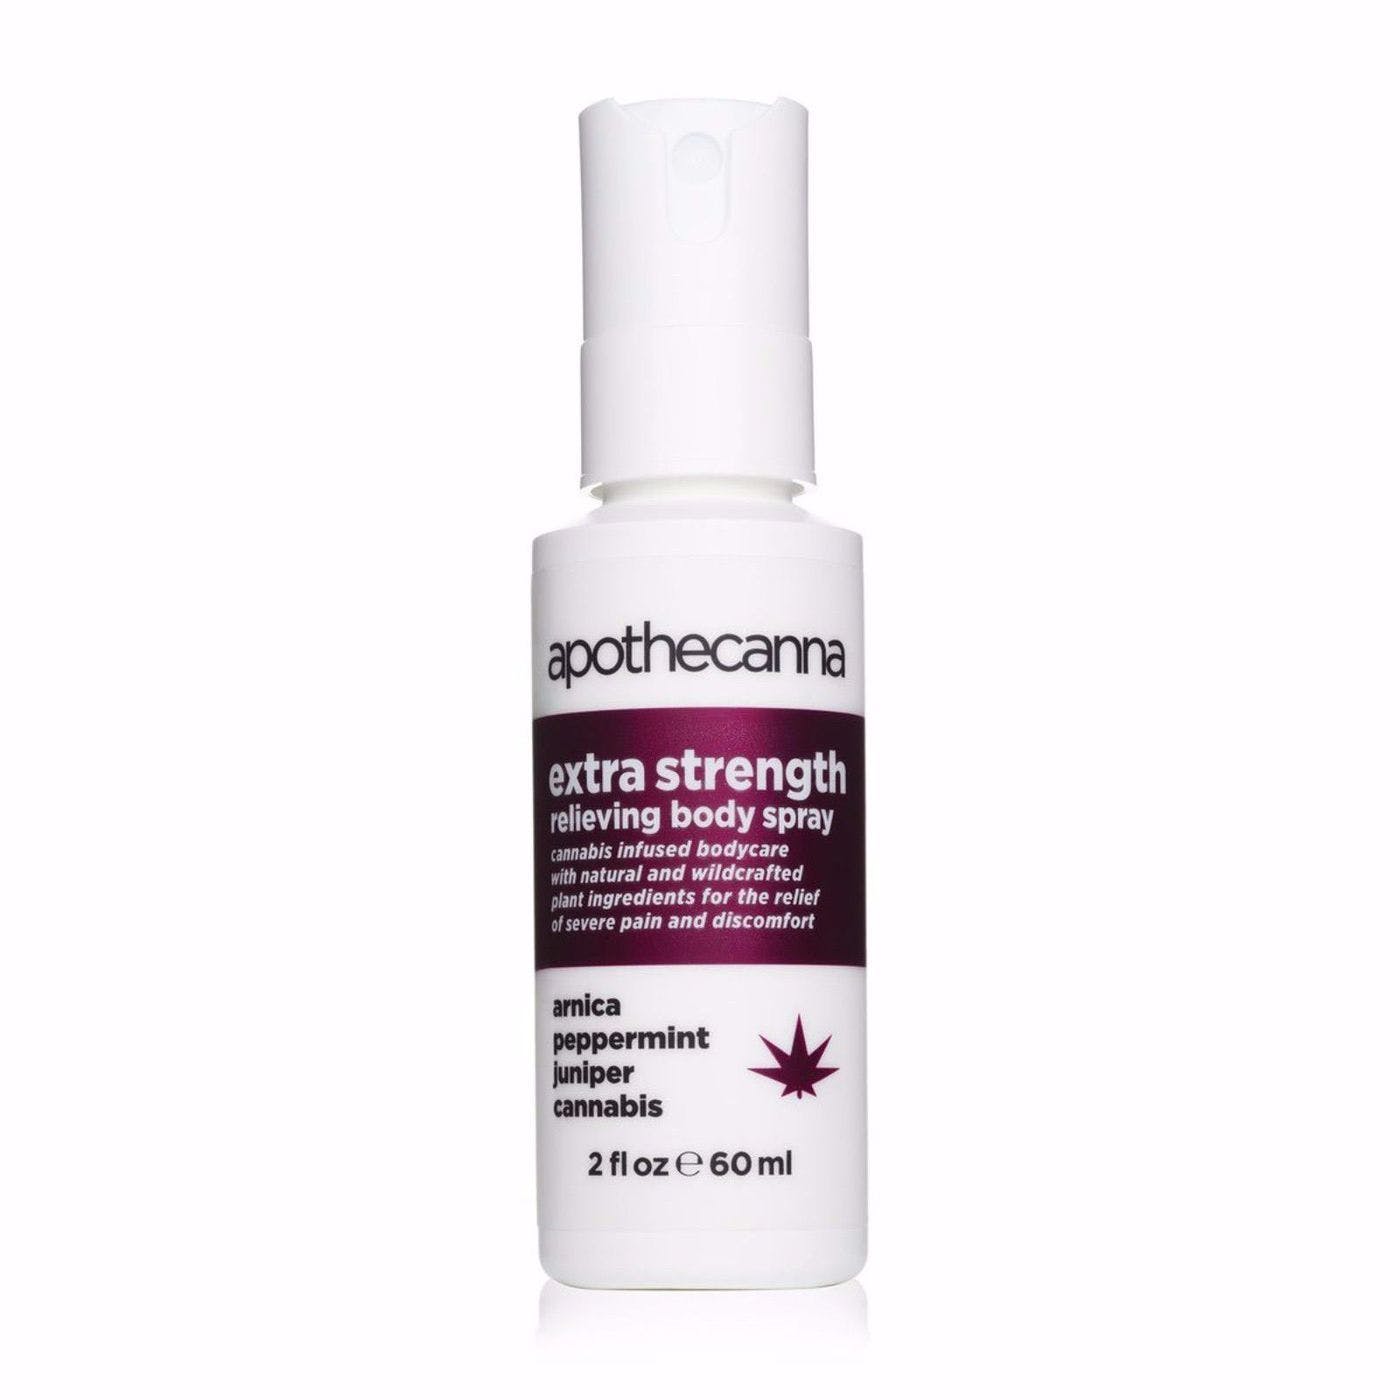 Apothecanna Extra Strength relieving body spray